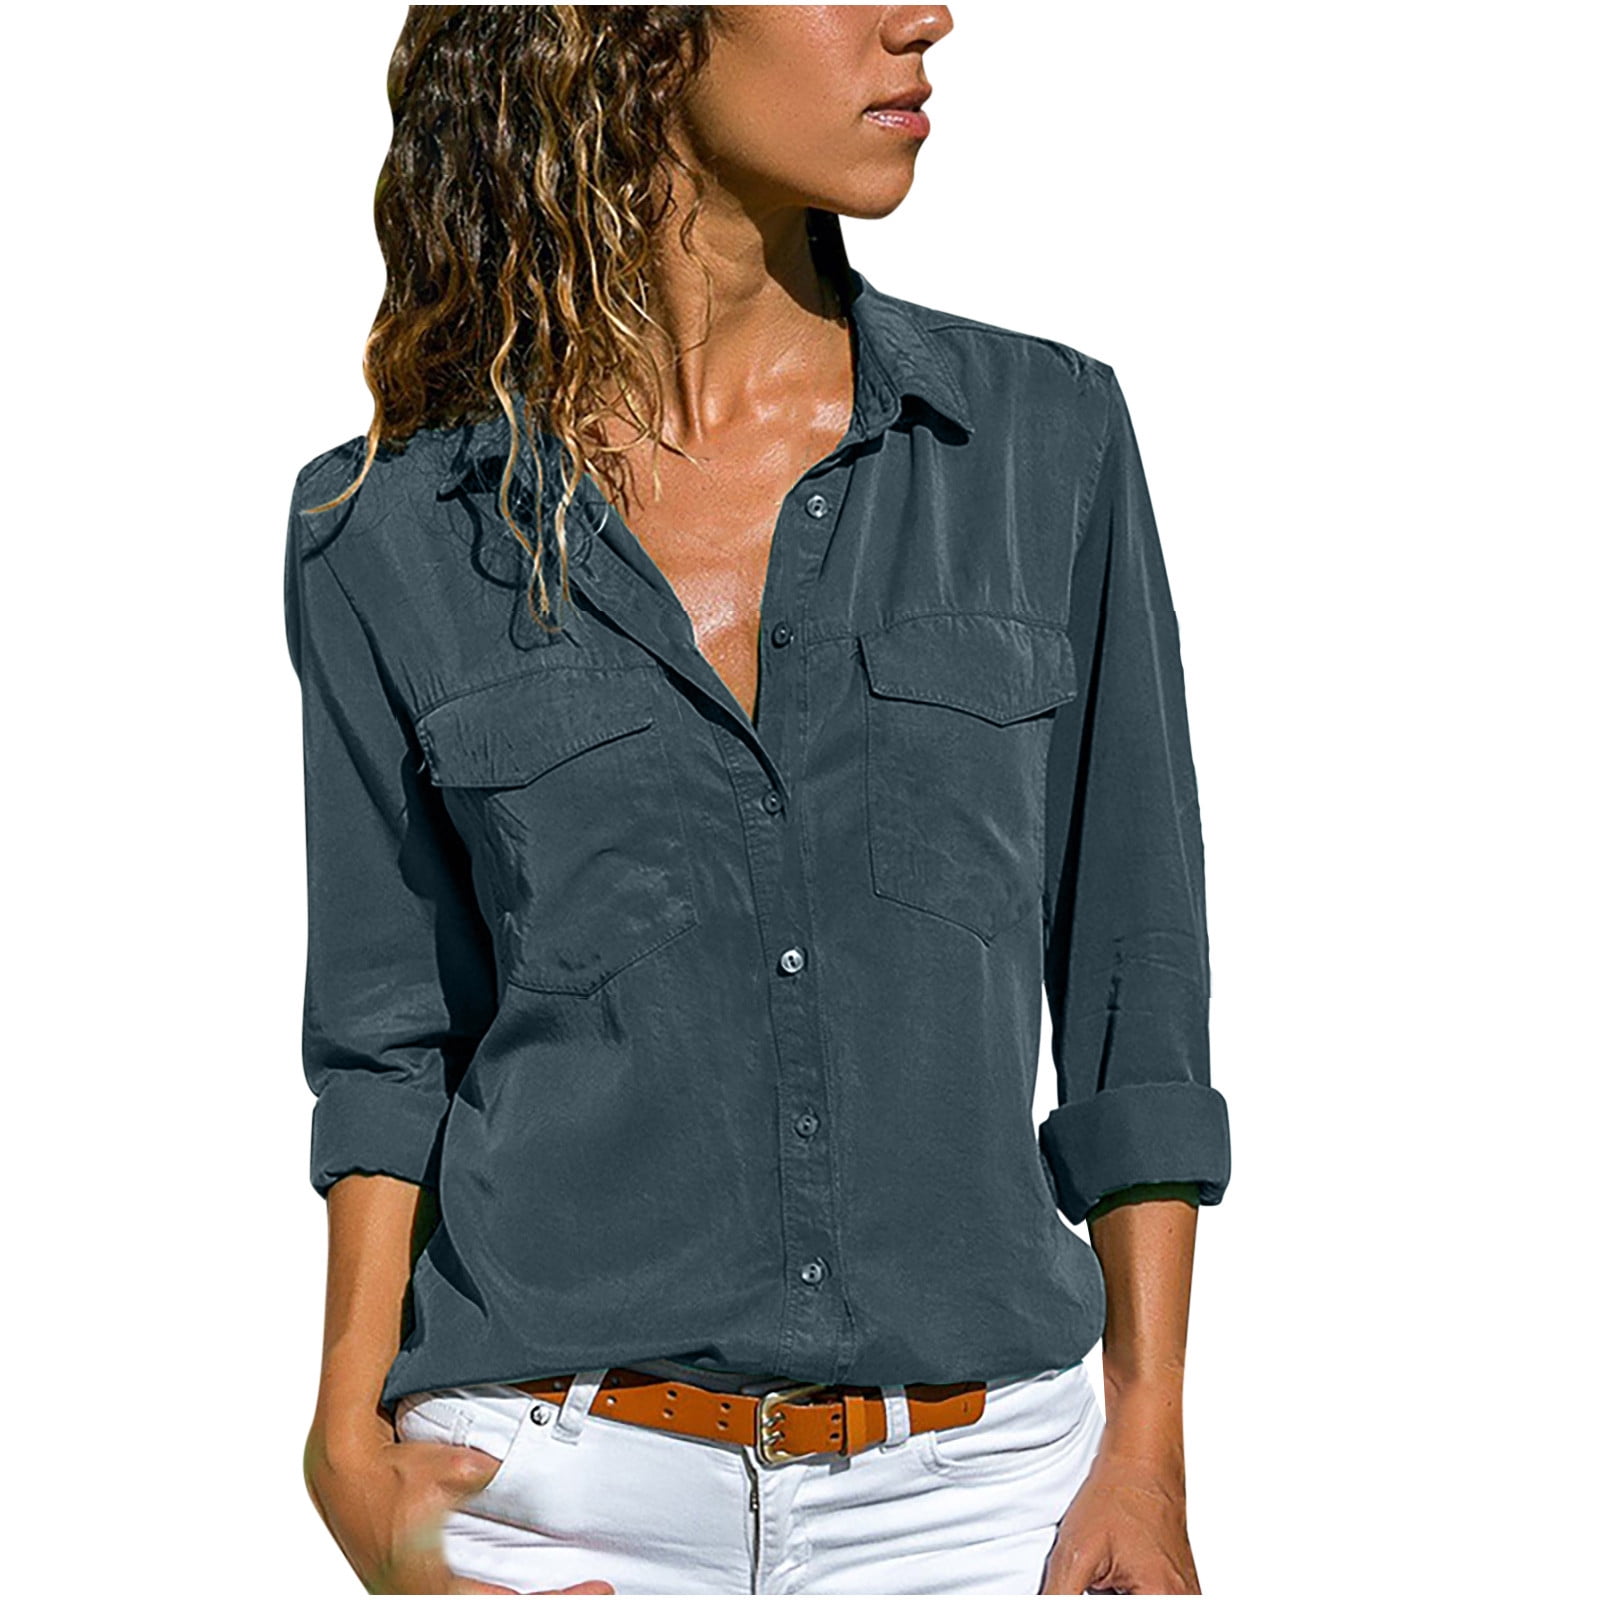 Women's Button Down Shirt, Long Sleeve Cotton Blouse, Long Jeans